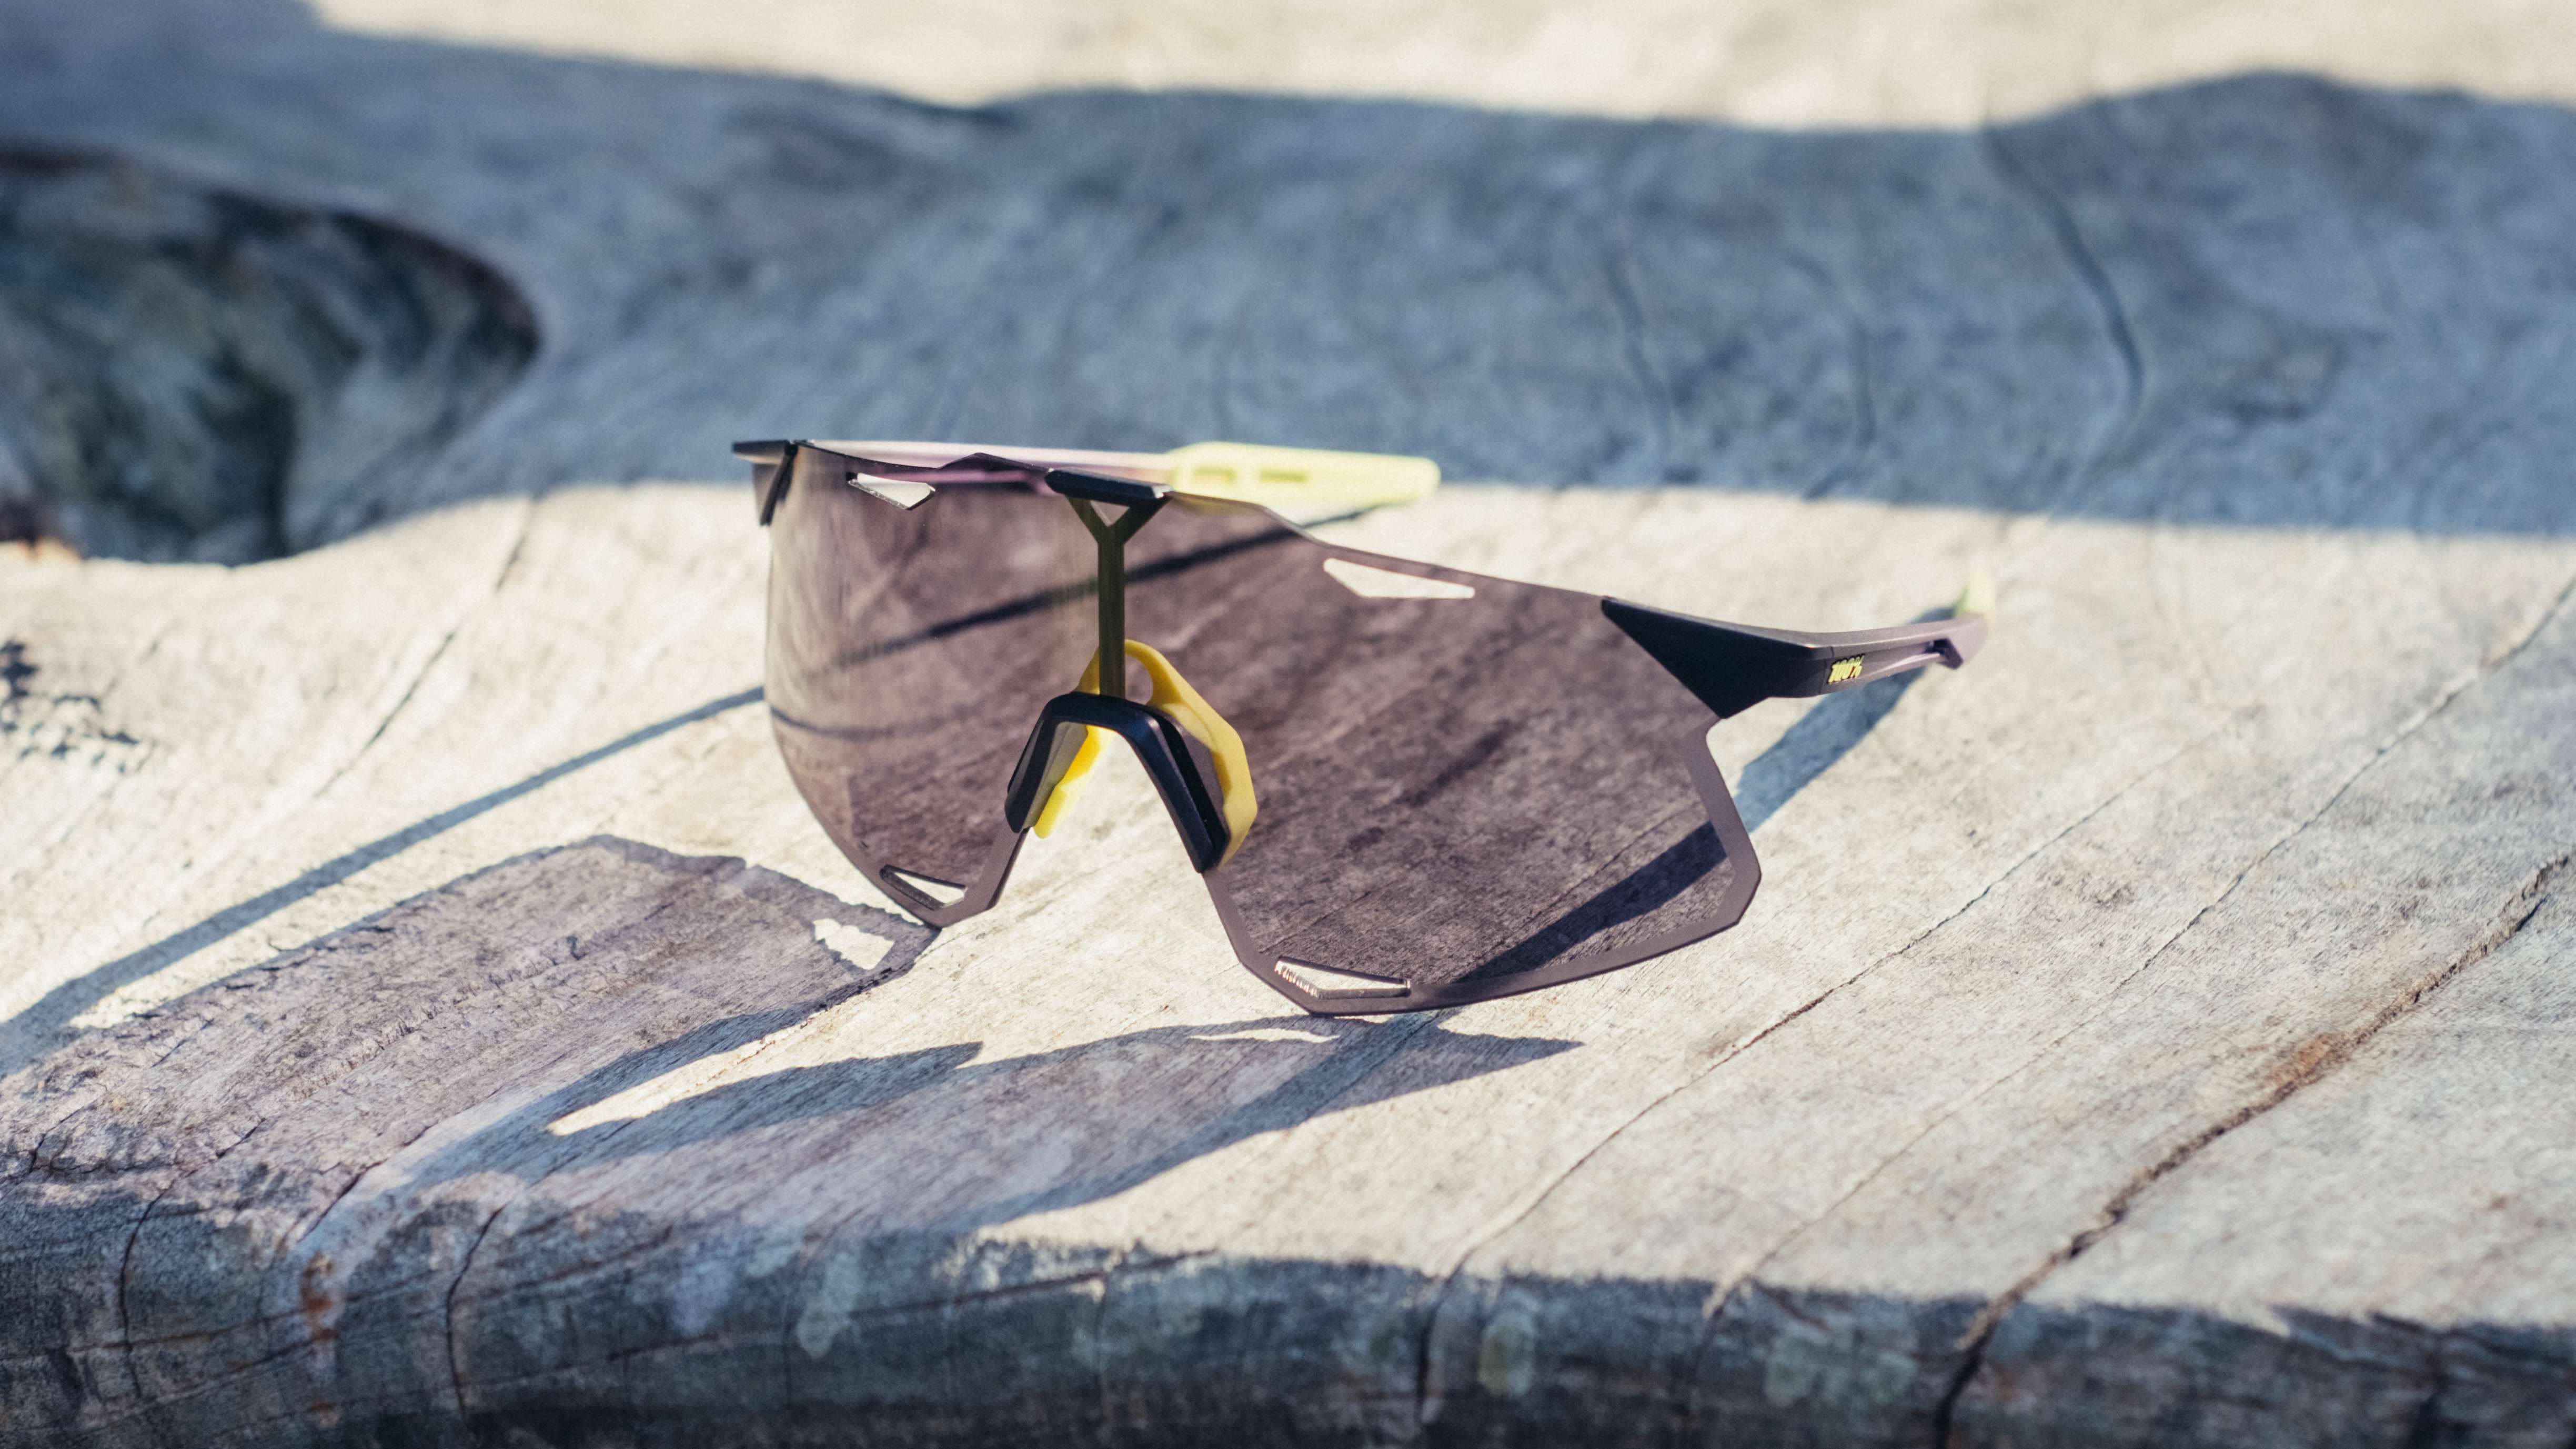 100% Hypercraft sunglasses review: An angular featherweight that's